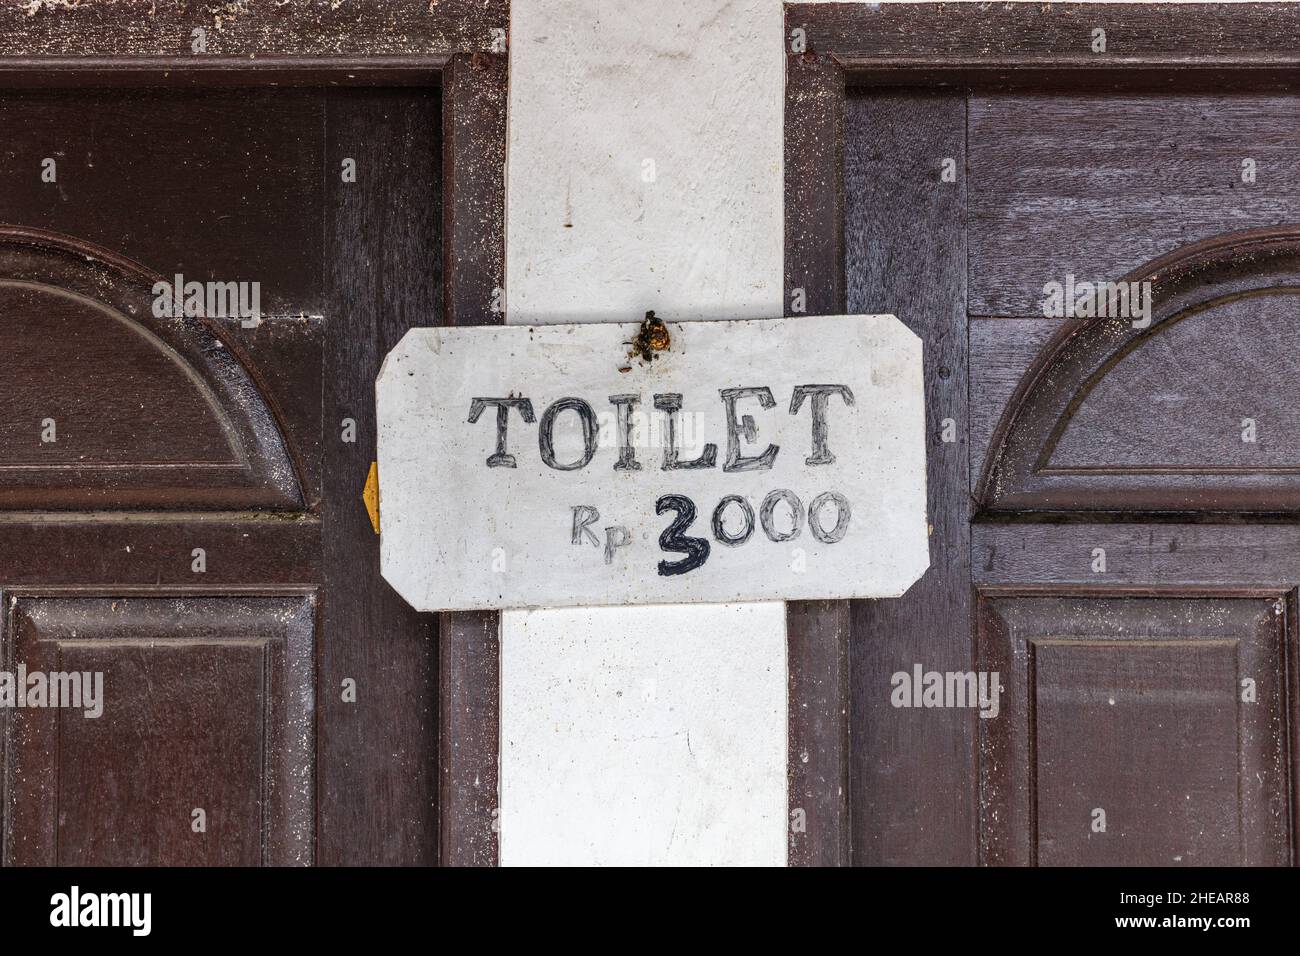 Toilet indonesia -Fotos und -Bildmaterial in hoher Auflösung – Alamy